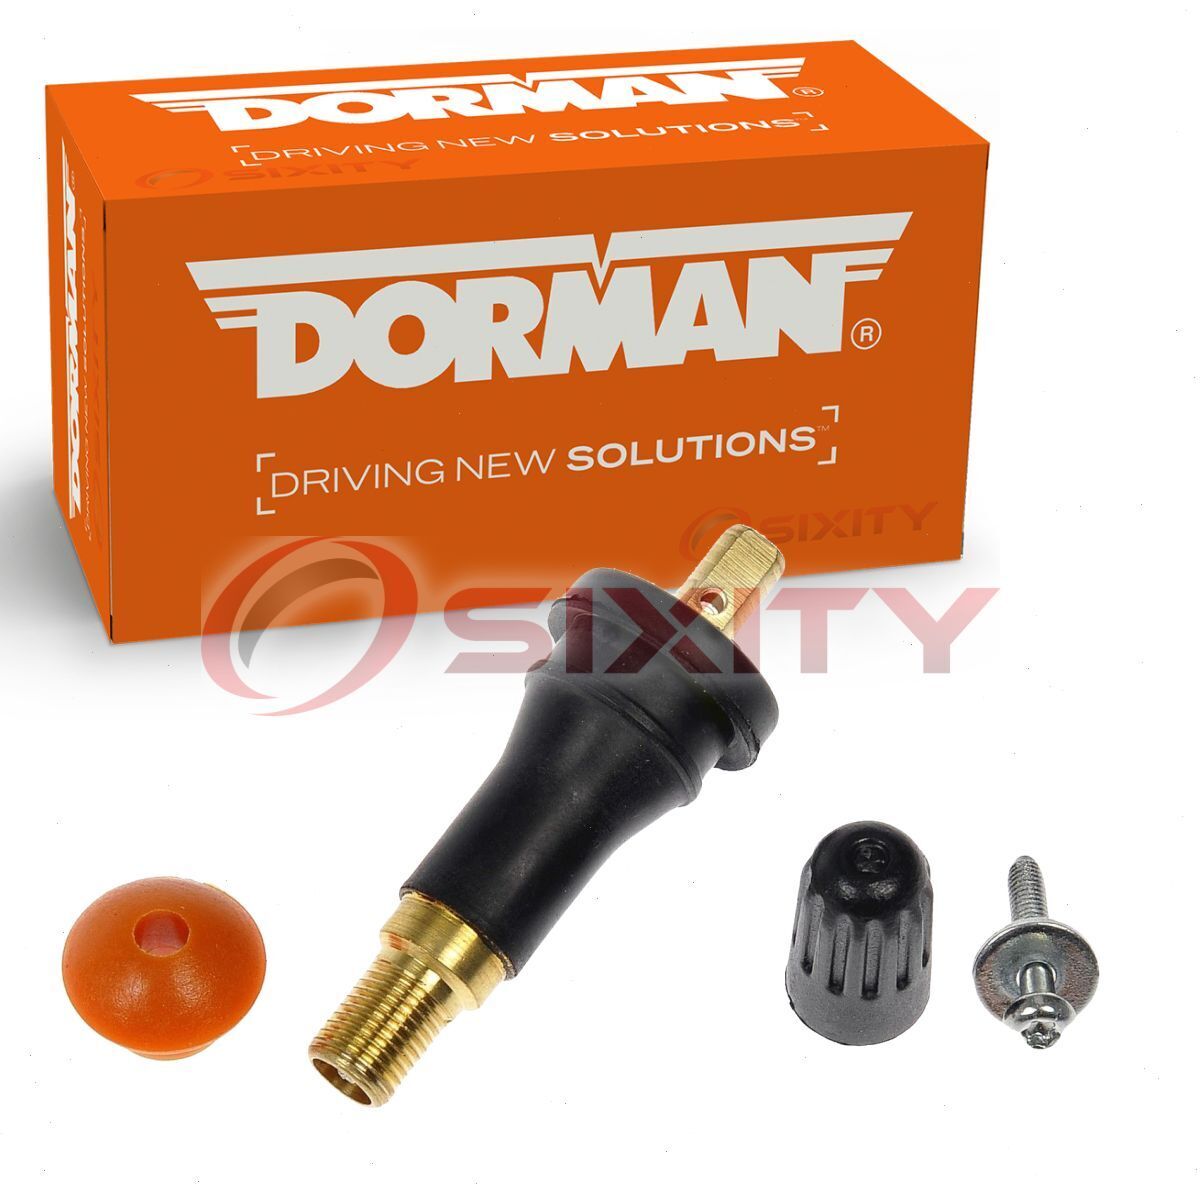 Dorman TPMS Valve Kit for 2000 BMW 323Ci Tire Pressure Monitoring System  oa